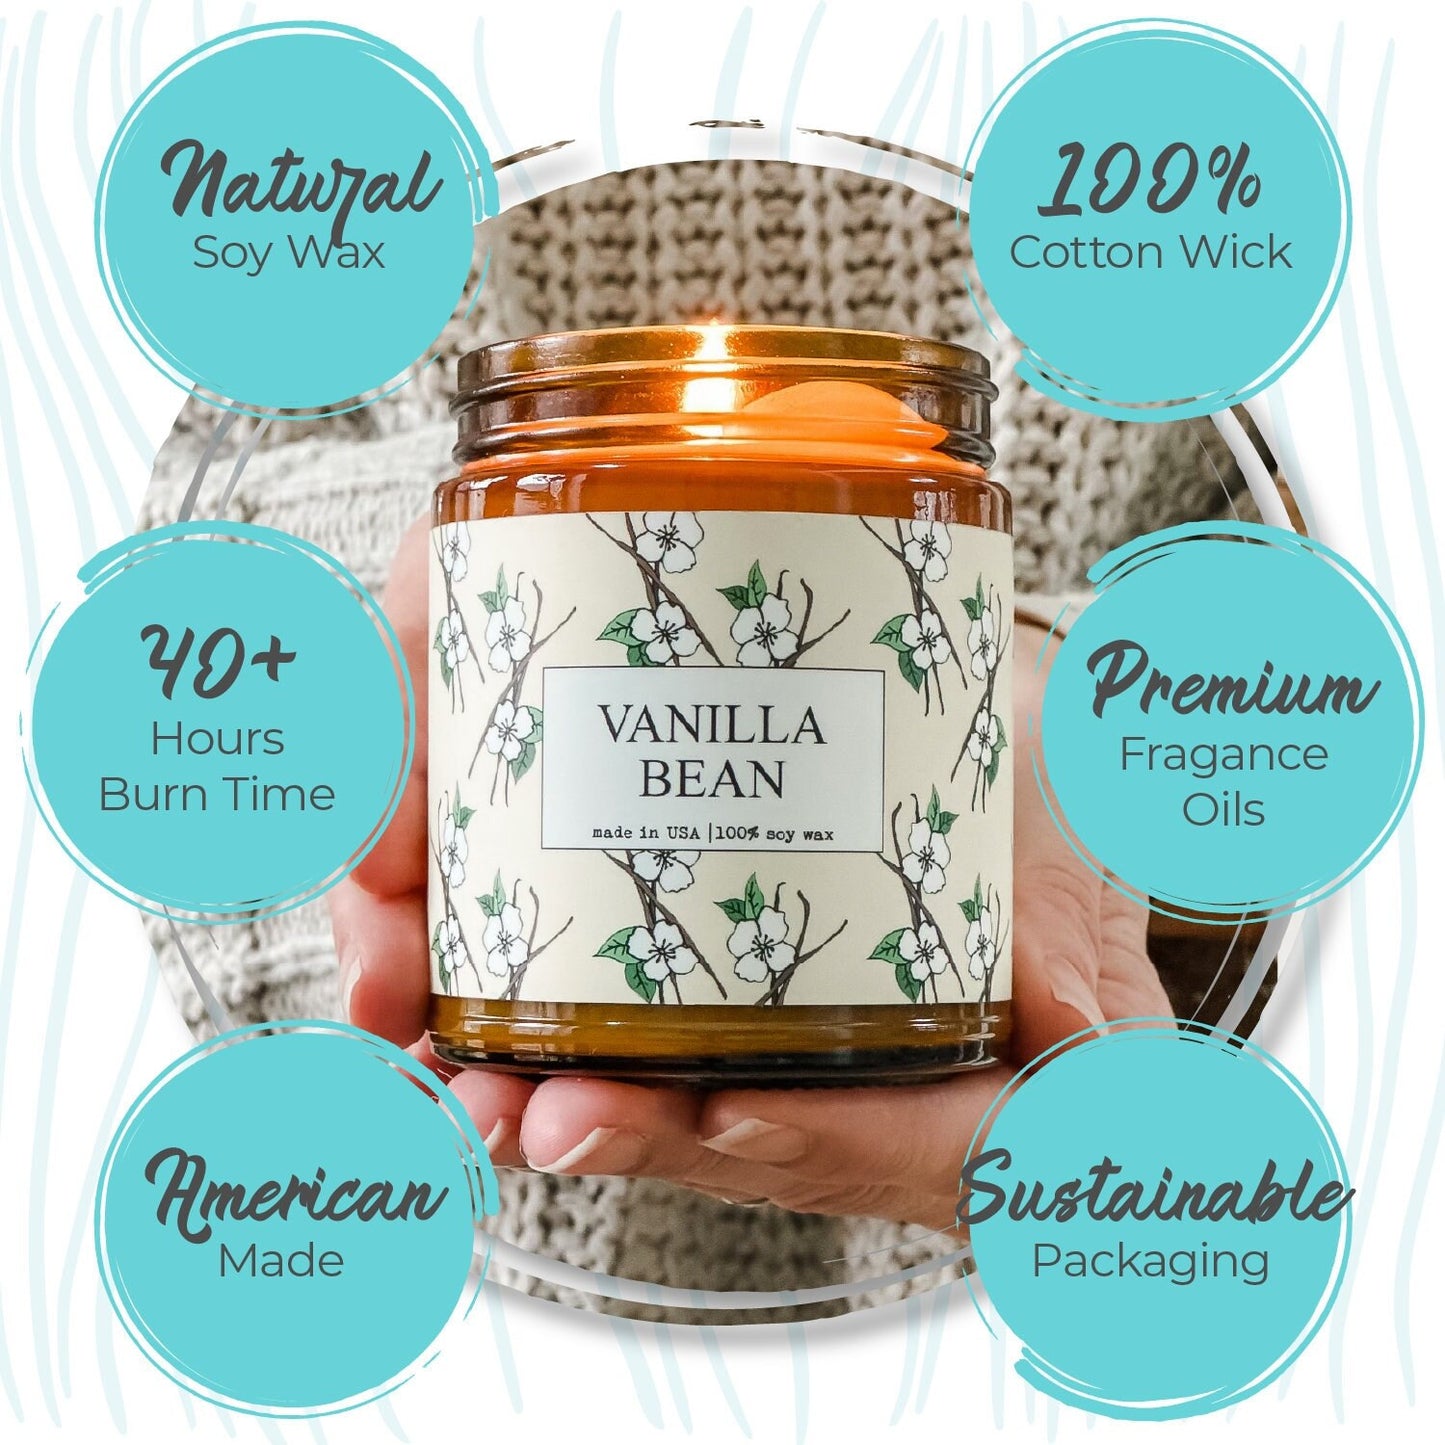 Vanilla Bean - 9oz Glass Jar Candle - Craft Paper Label